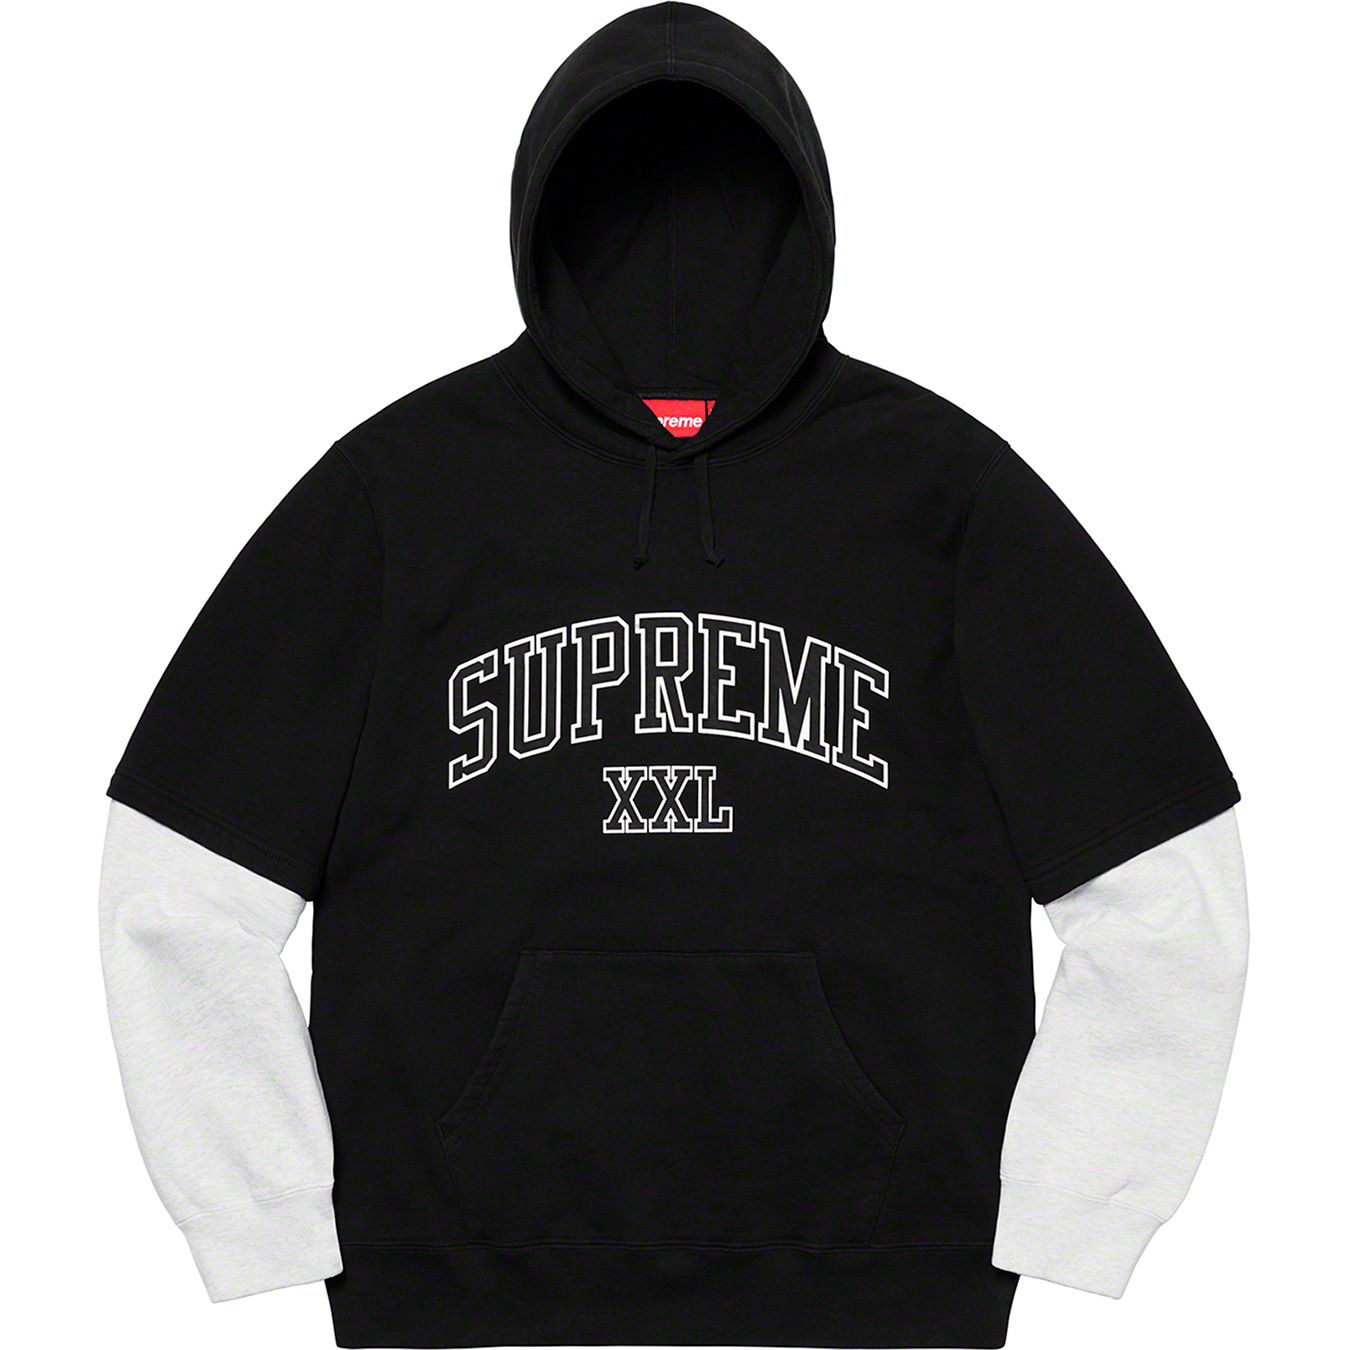 XXL Hooded Sweatshirt - spring summer 2020 - Supreme